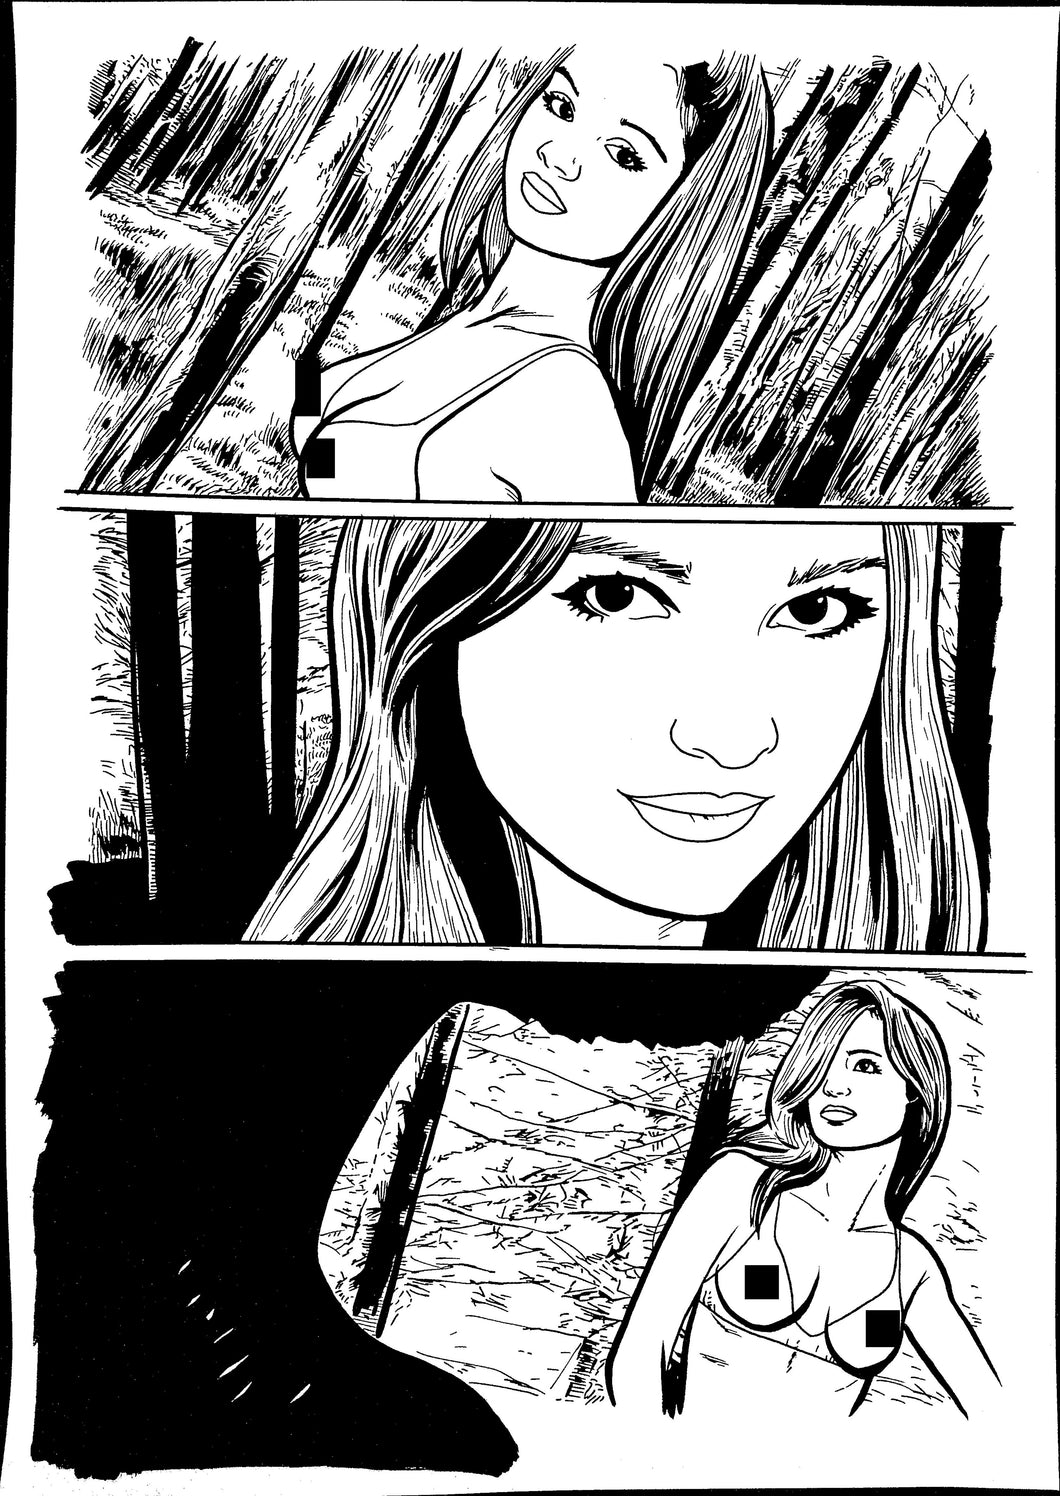 Jungle Captive #2 - Story Page 23 - Original Art